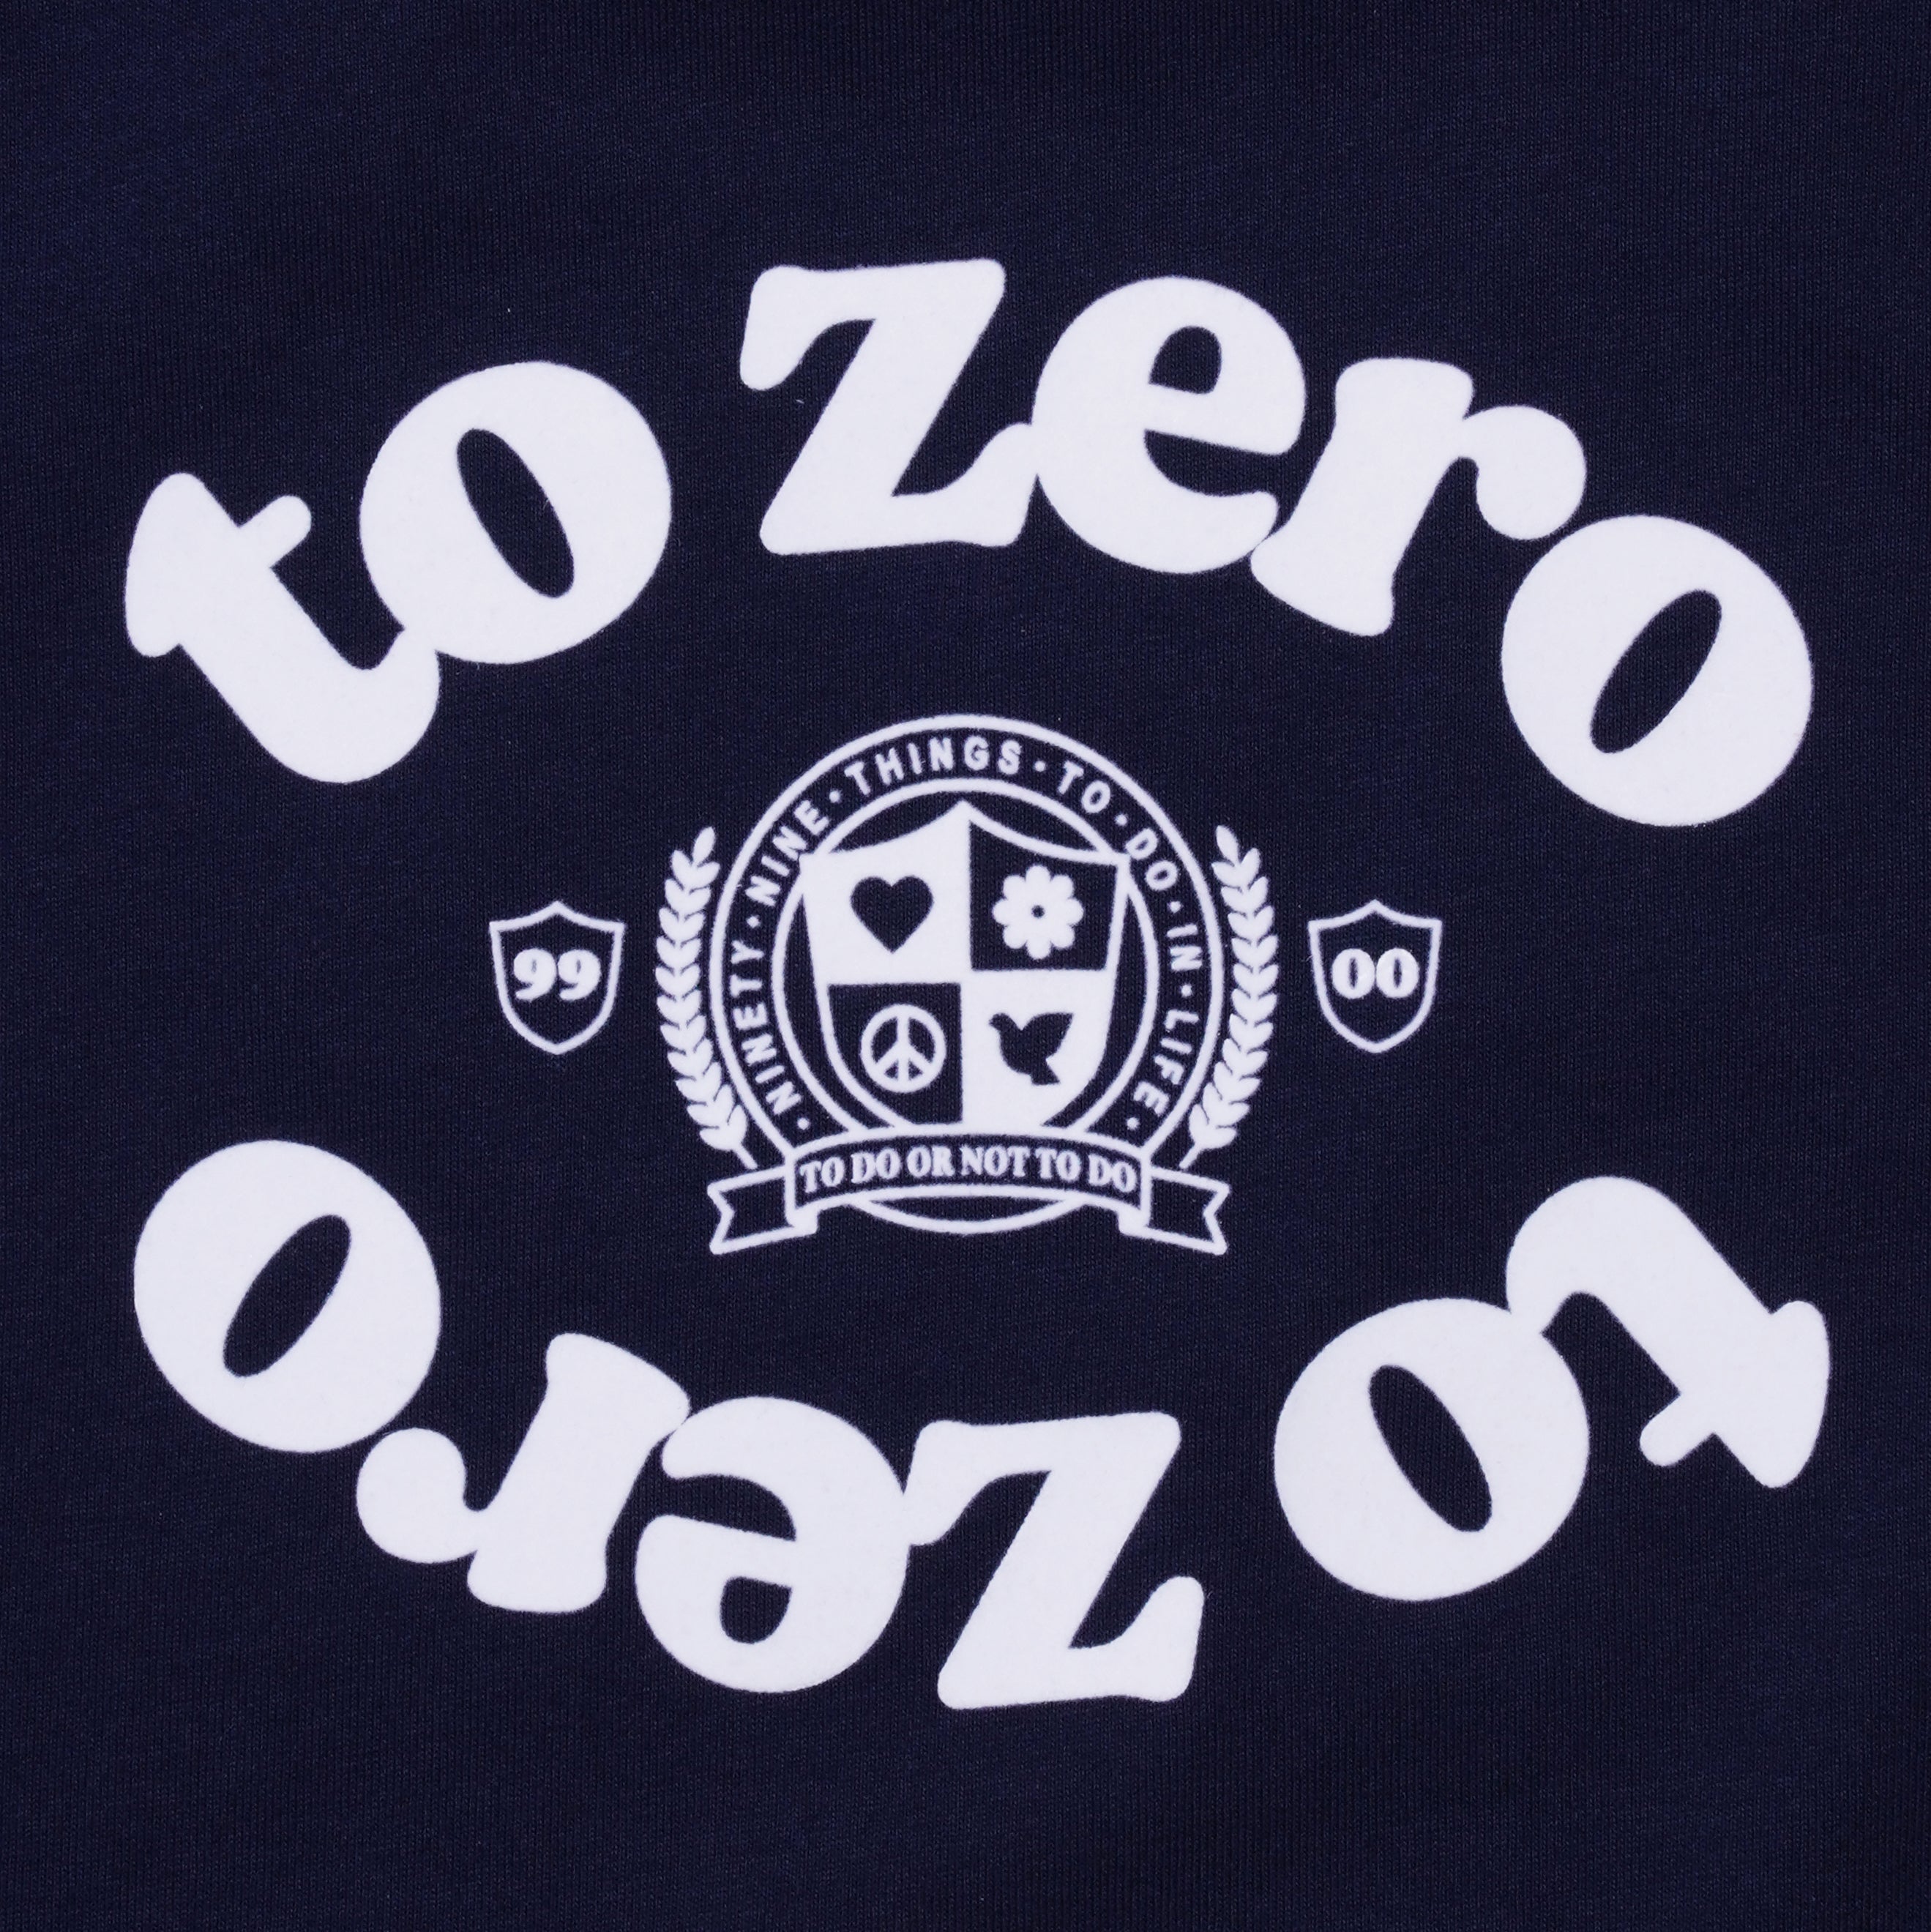 'TO ZERO COLLEGE BADGE' Flocking Print T-Shirt ( LIGHT BEIGE )